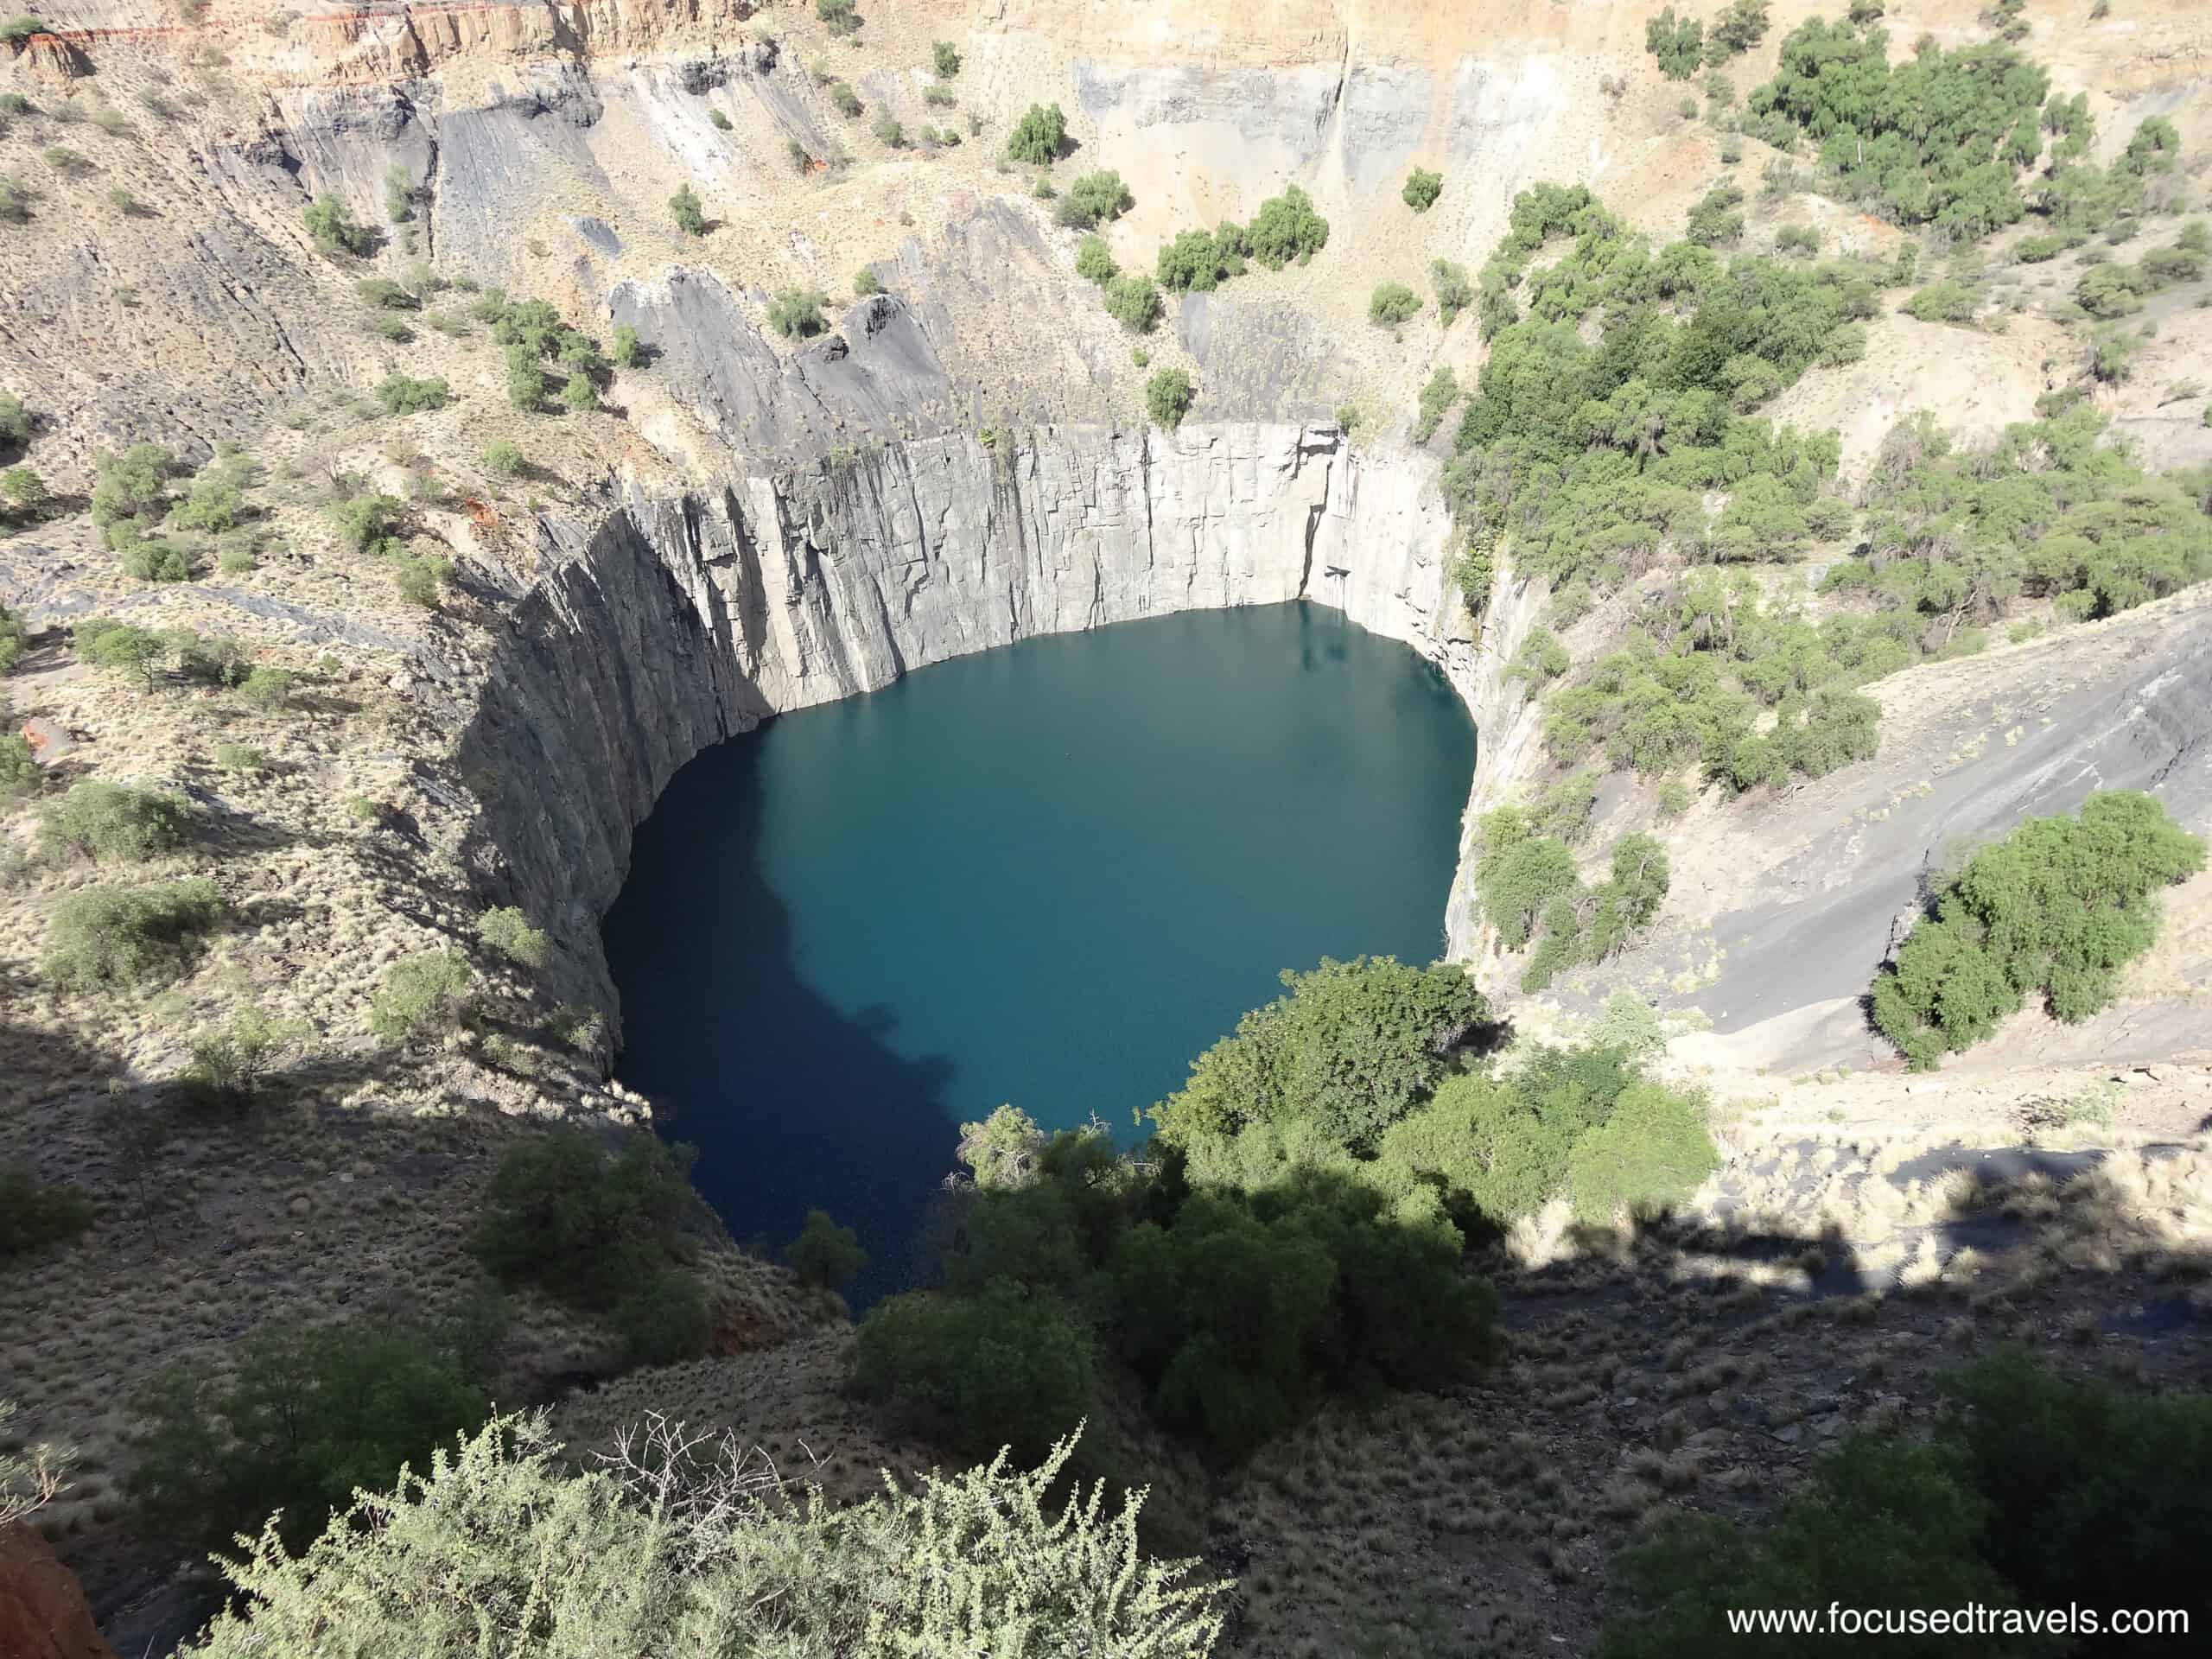 Kimberley's Big Hole from the suspension bridge